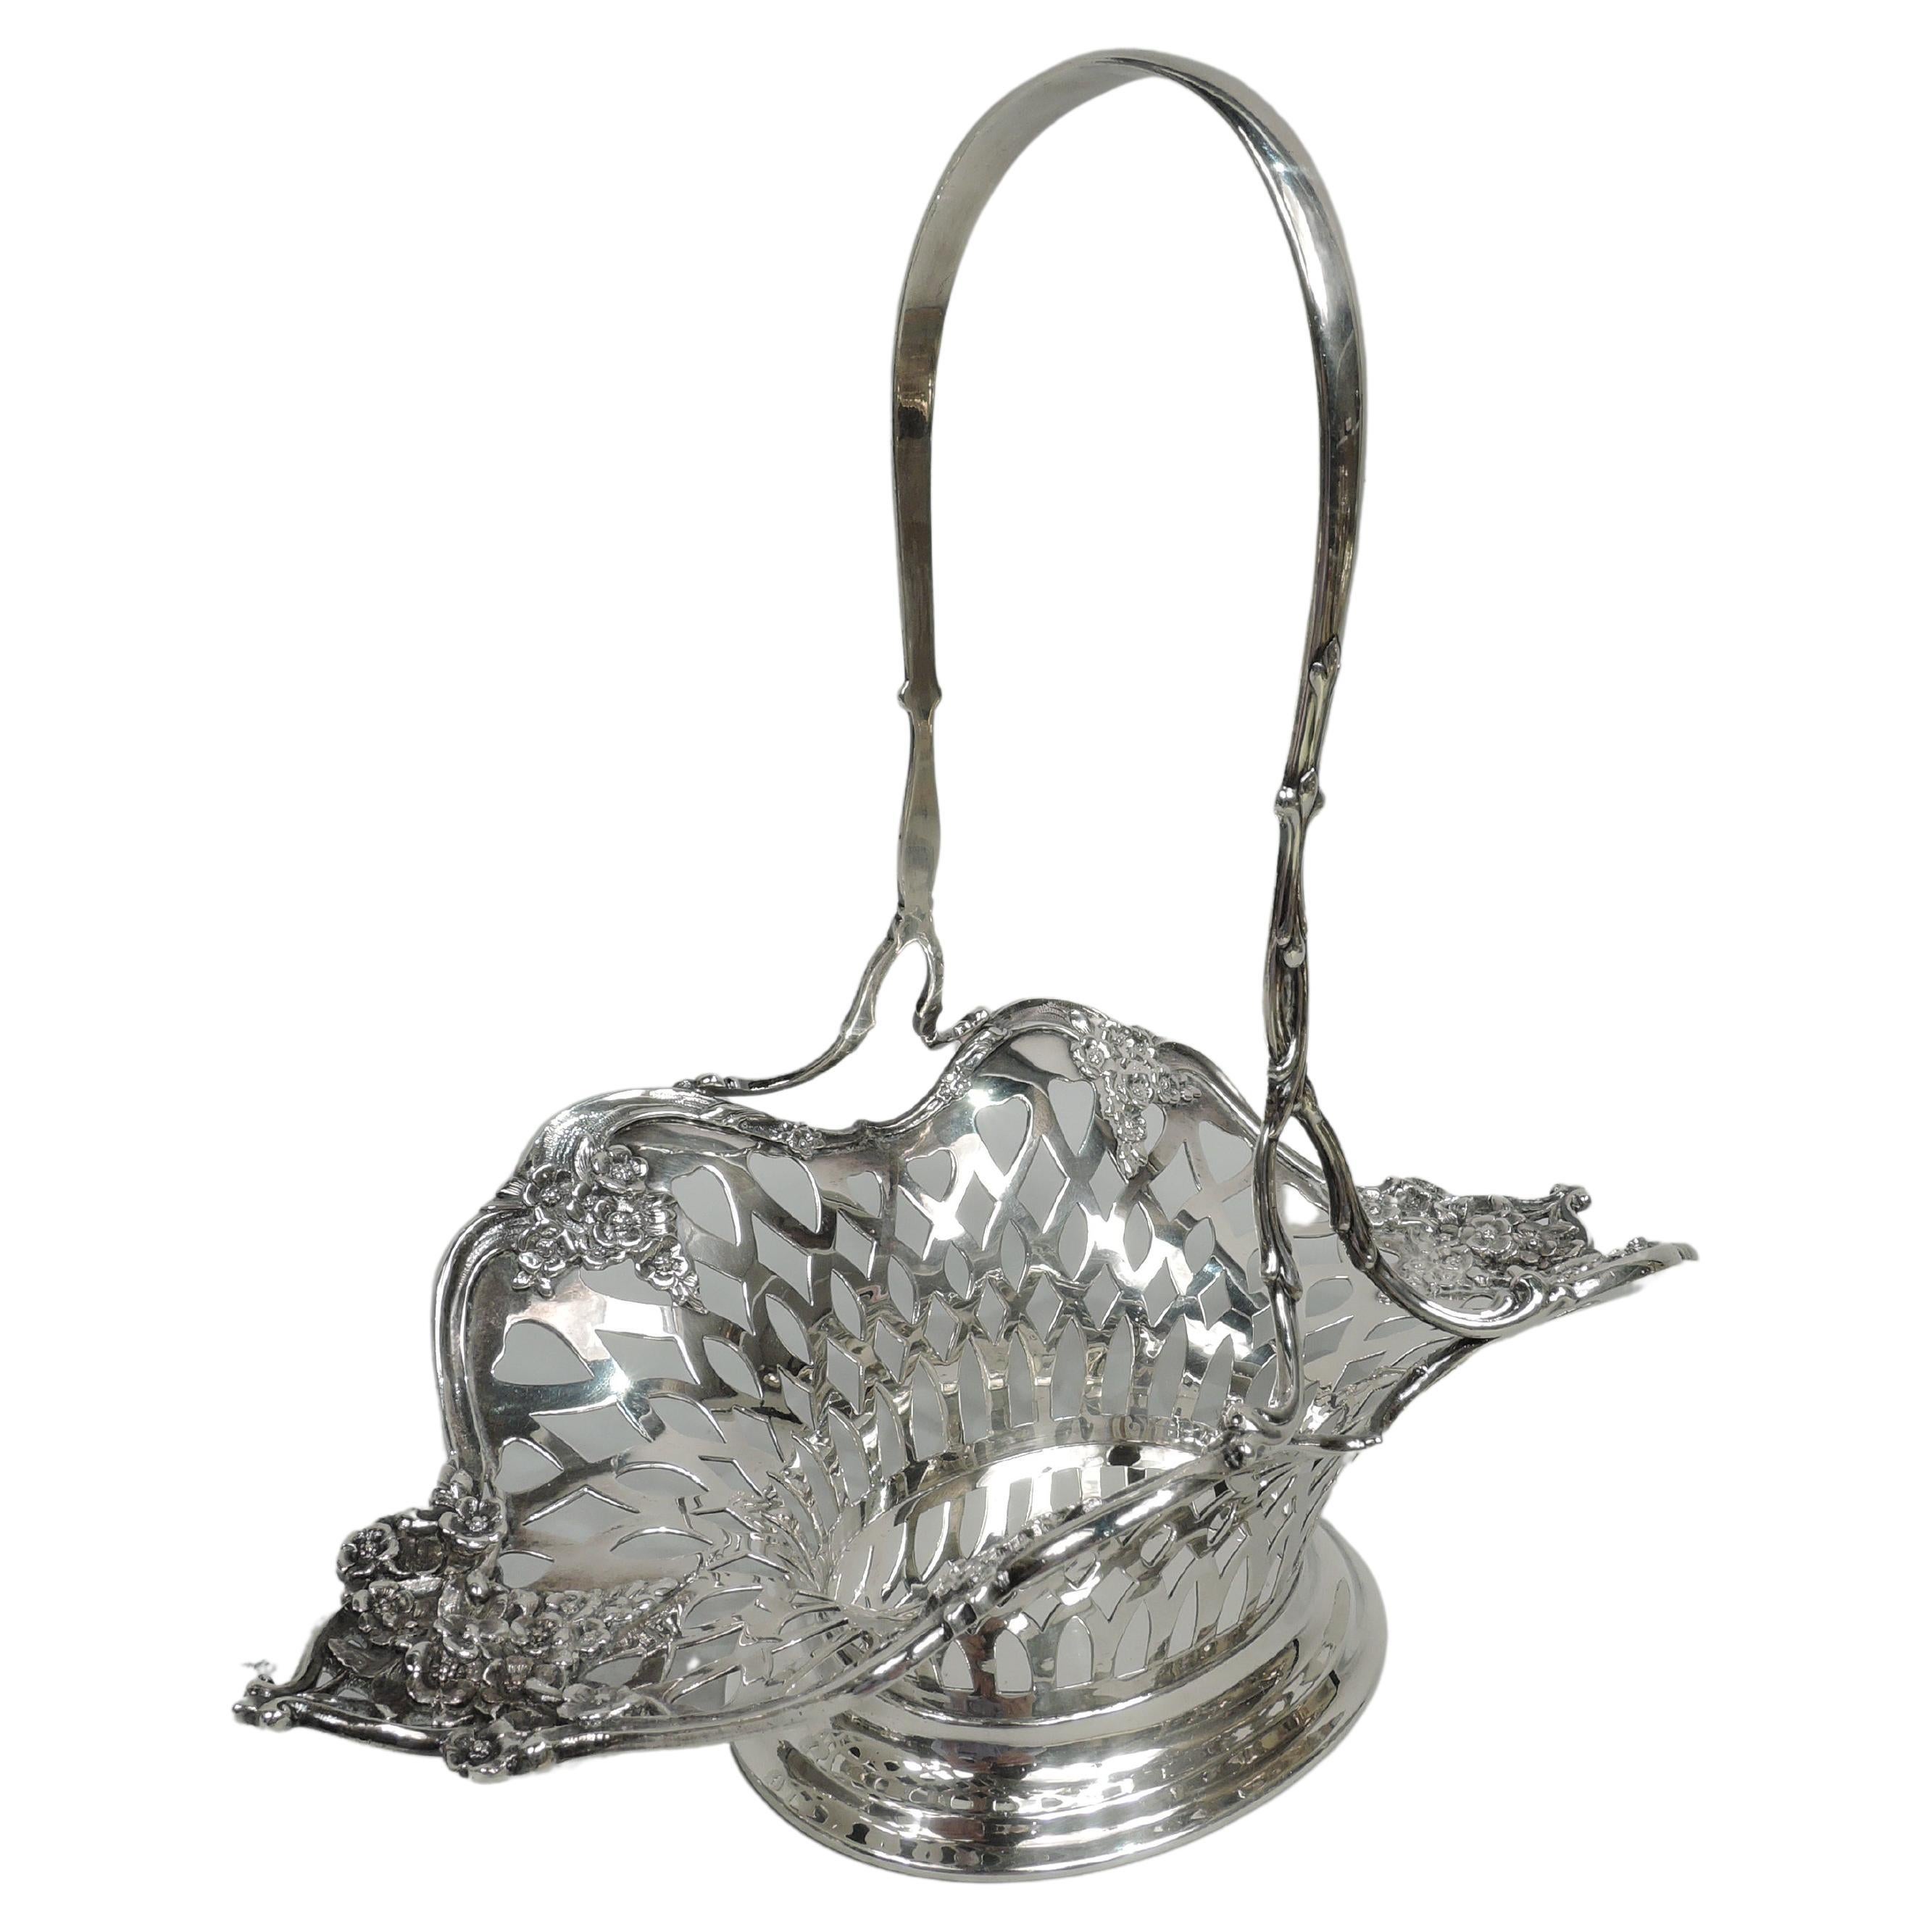 Pretty Antique Tiffany American Edwardian Sterling Silver Basket For Sale